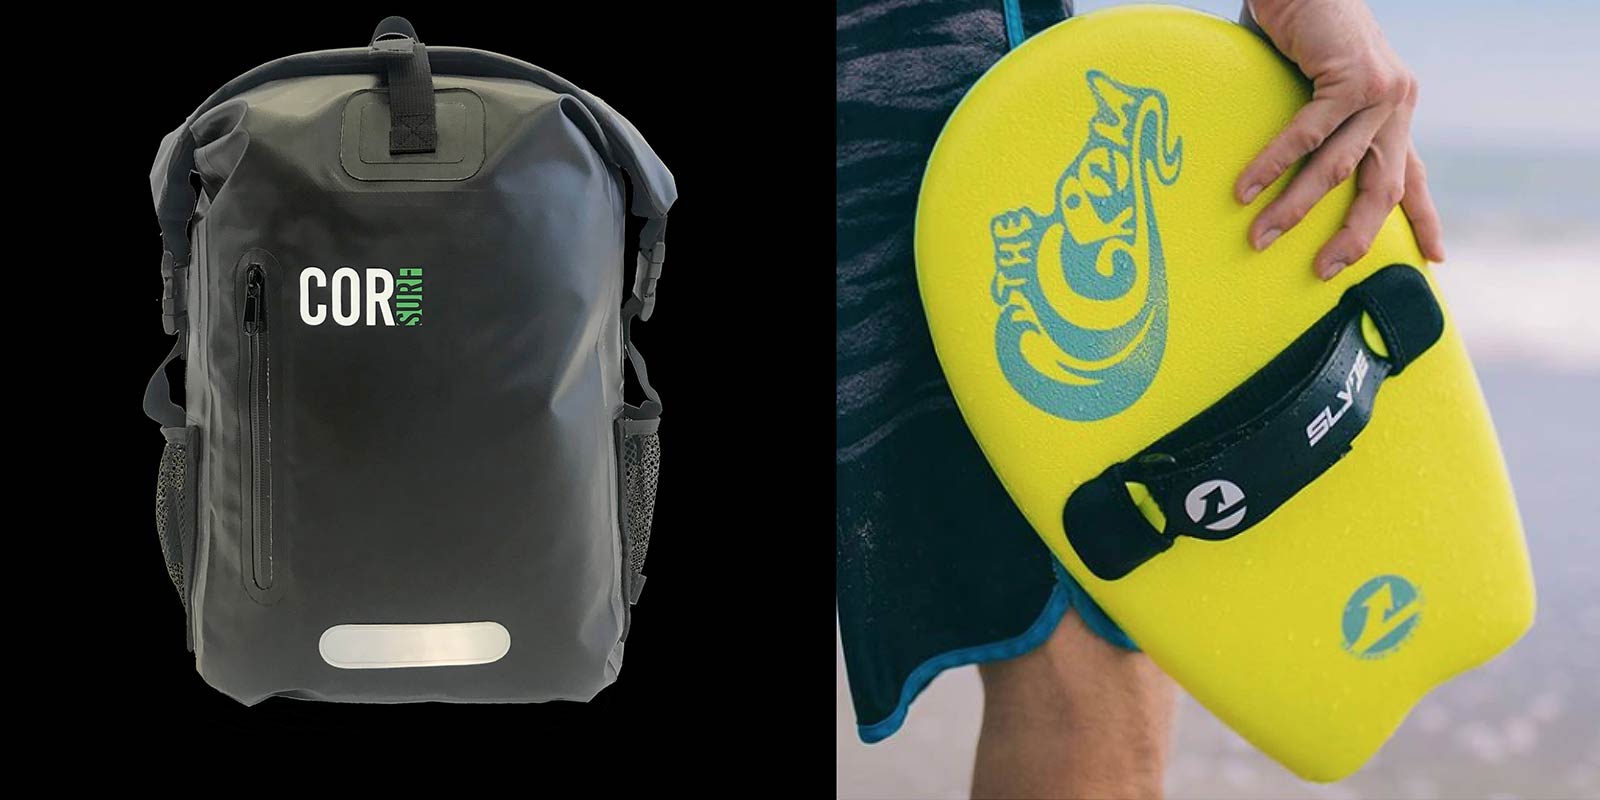 Giveaway Alert 💥Cor Surf Waterproof Dry BackPack x Slyde Handboards Gromboard